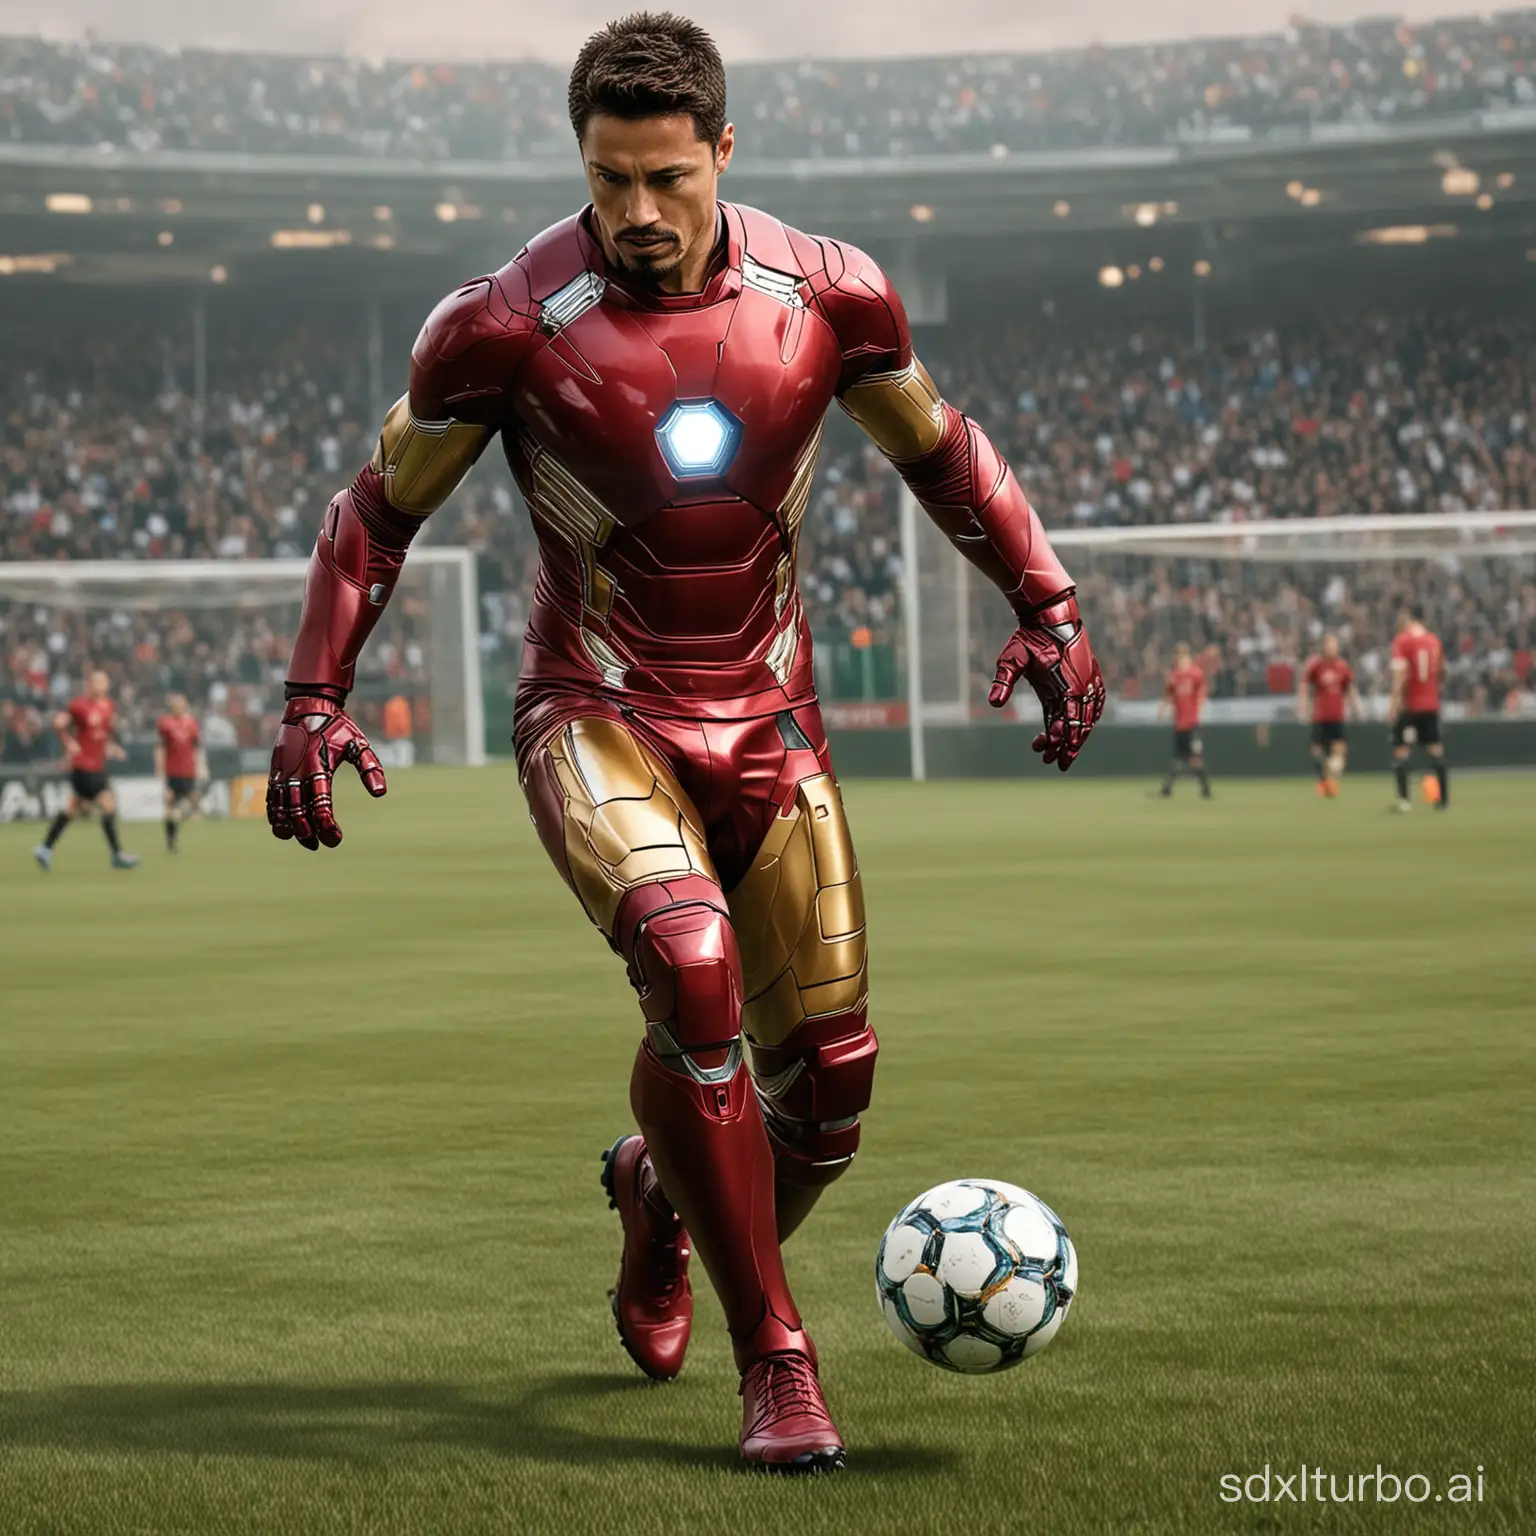 Iron-Man-Playing-Soccer-Against-Cristiano-Ronaldo